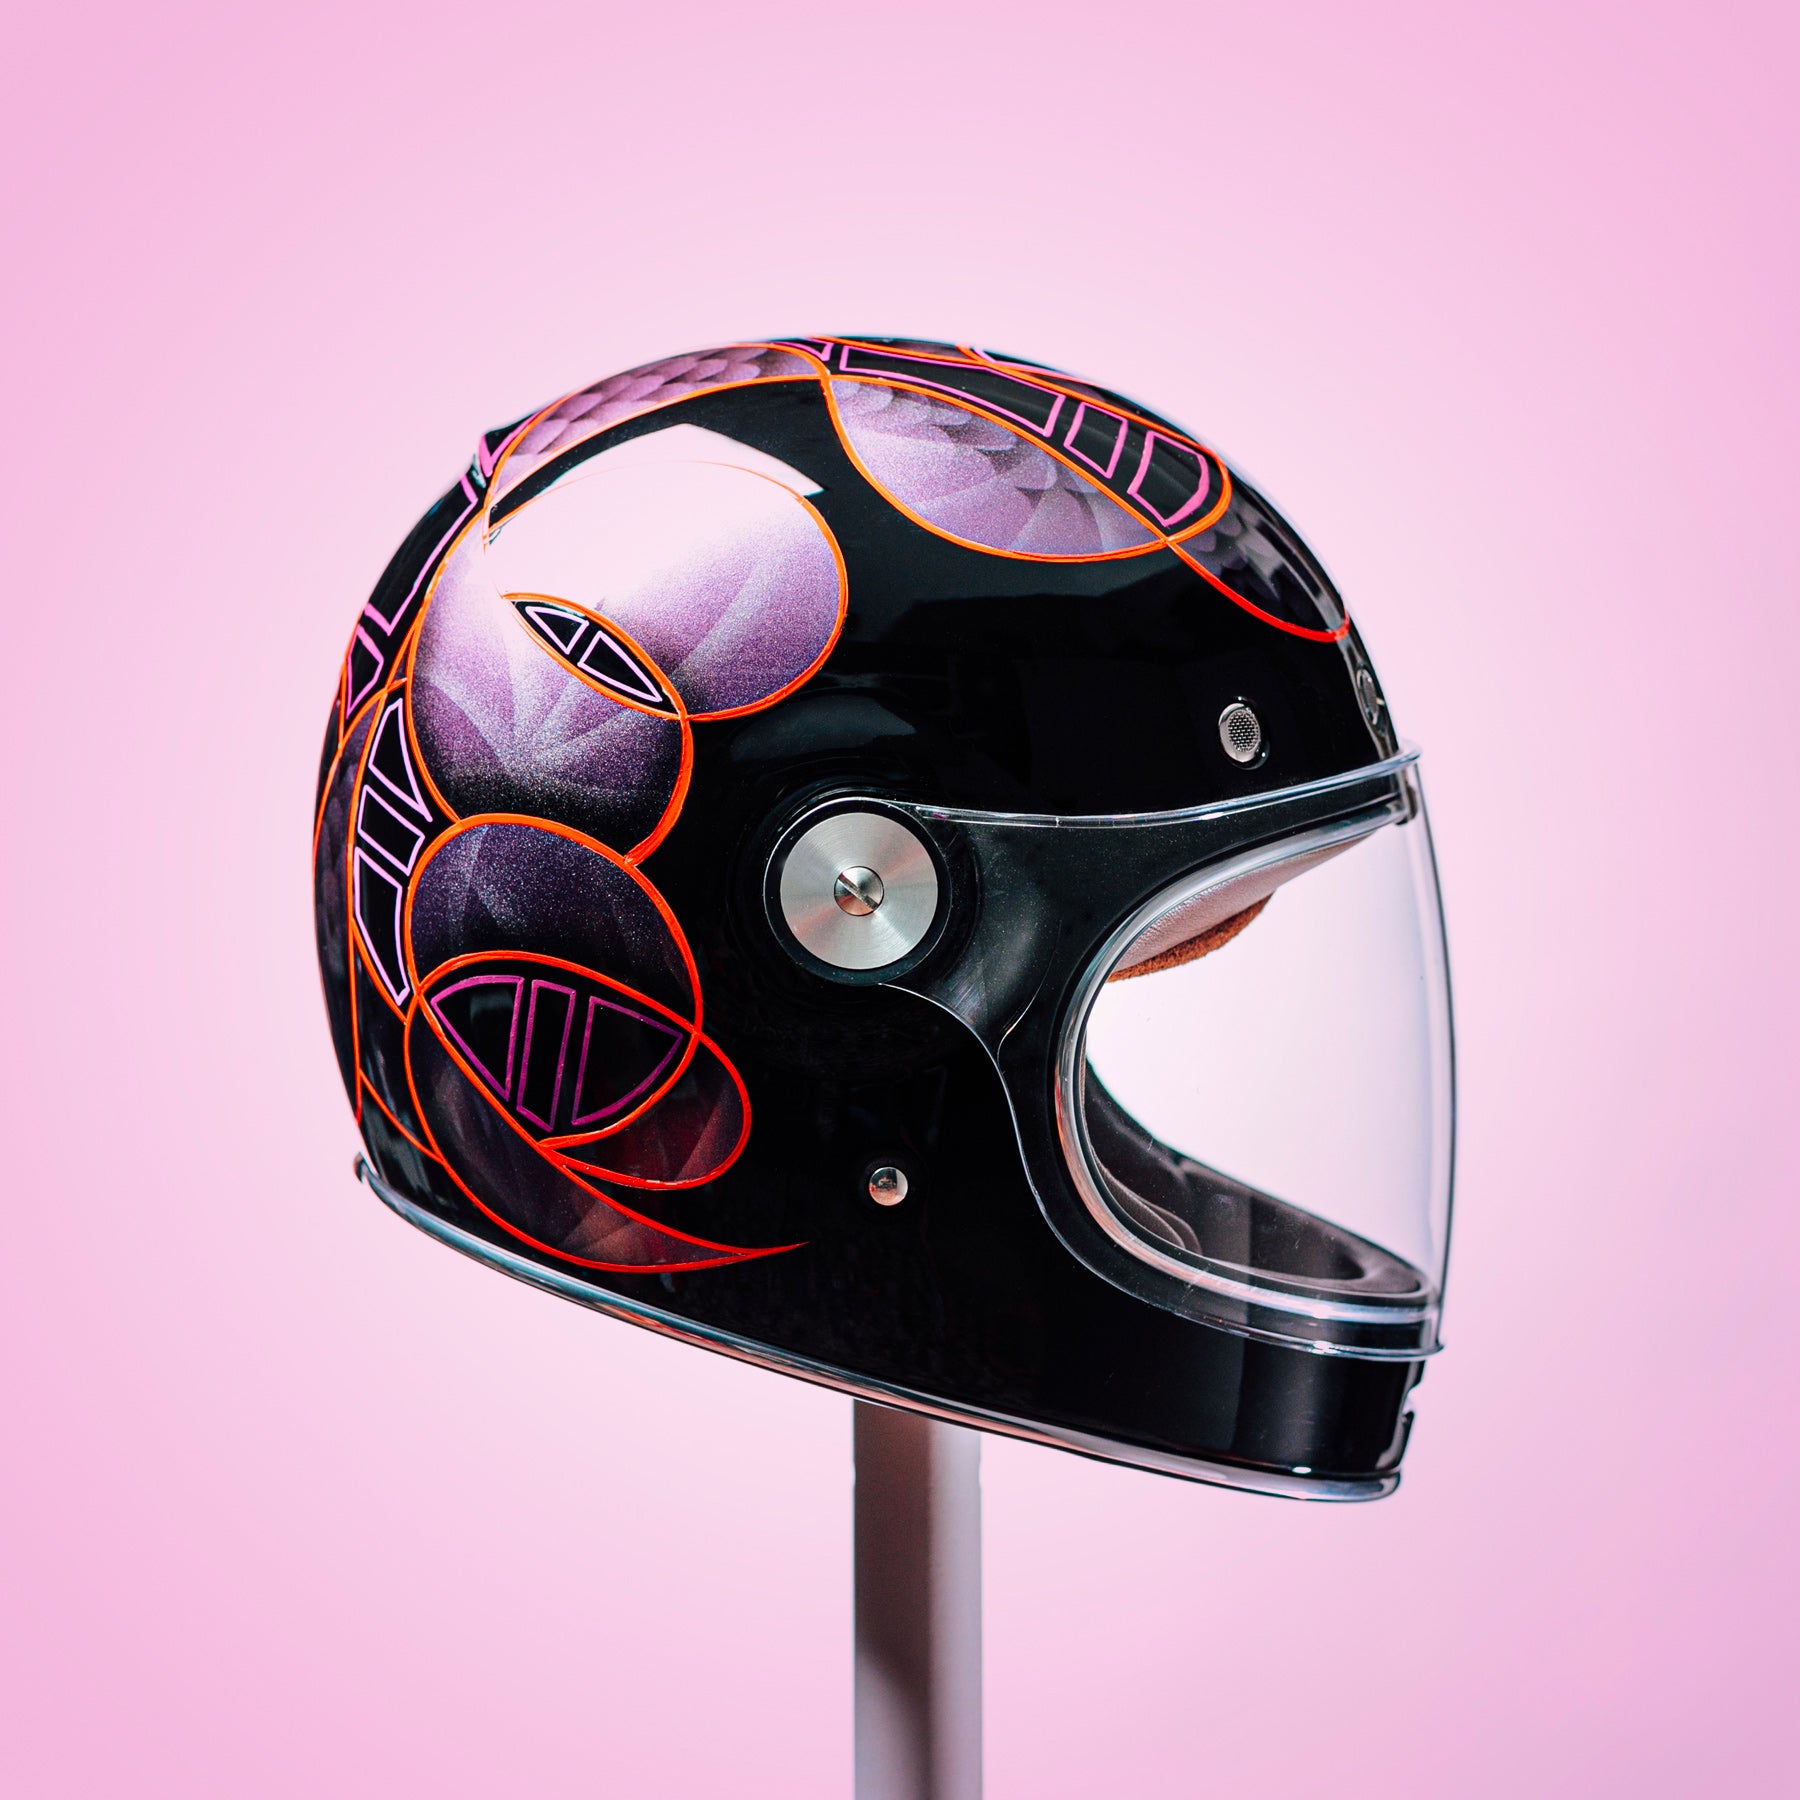 Trippy Ten helmet art show Pittsburgh Glory Daze motorcycle show Kurt Alexa Diserio Bell Helmets Phil Leonard Syrarium Studios